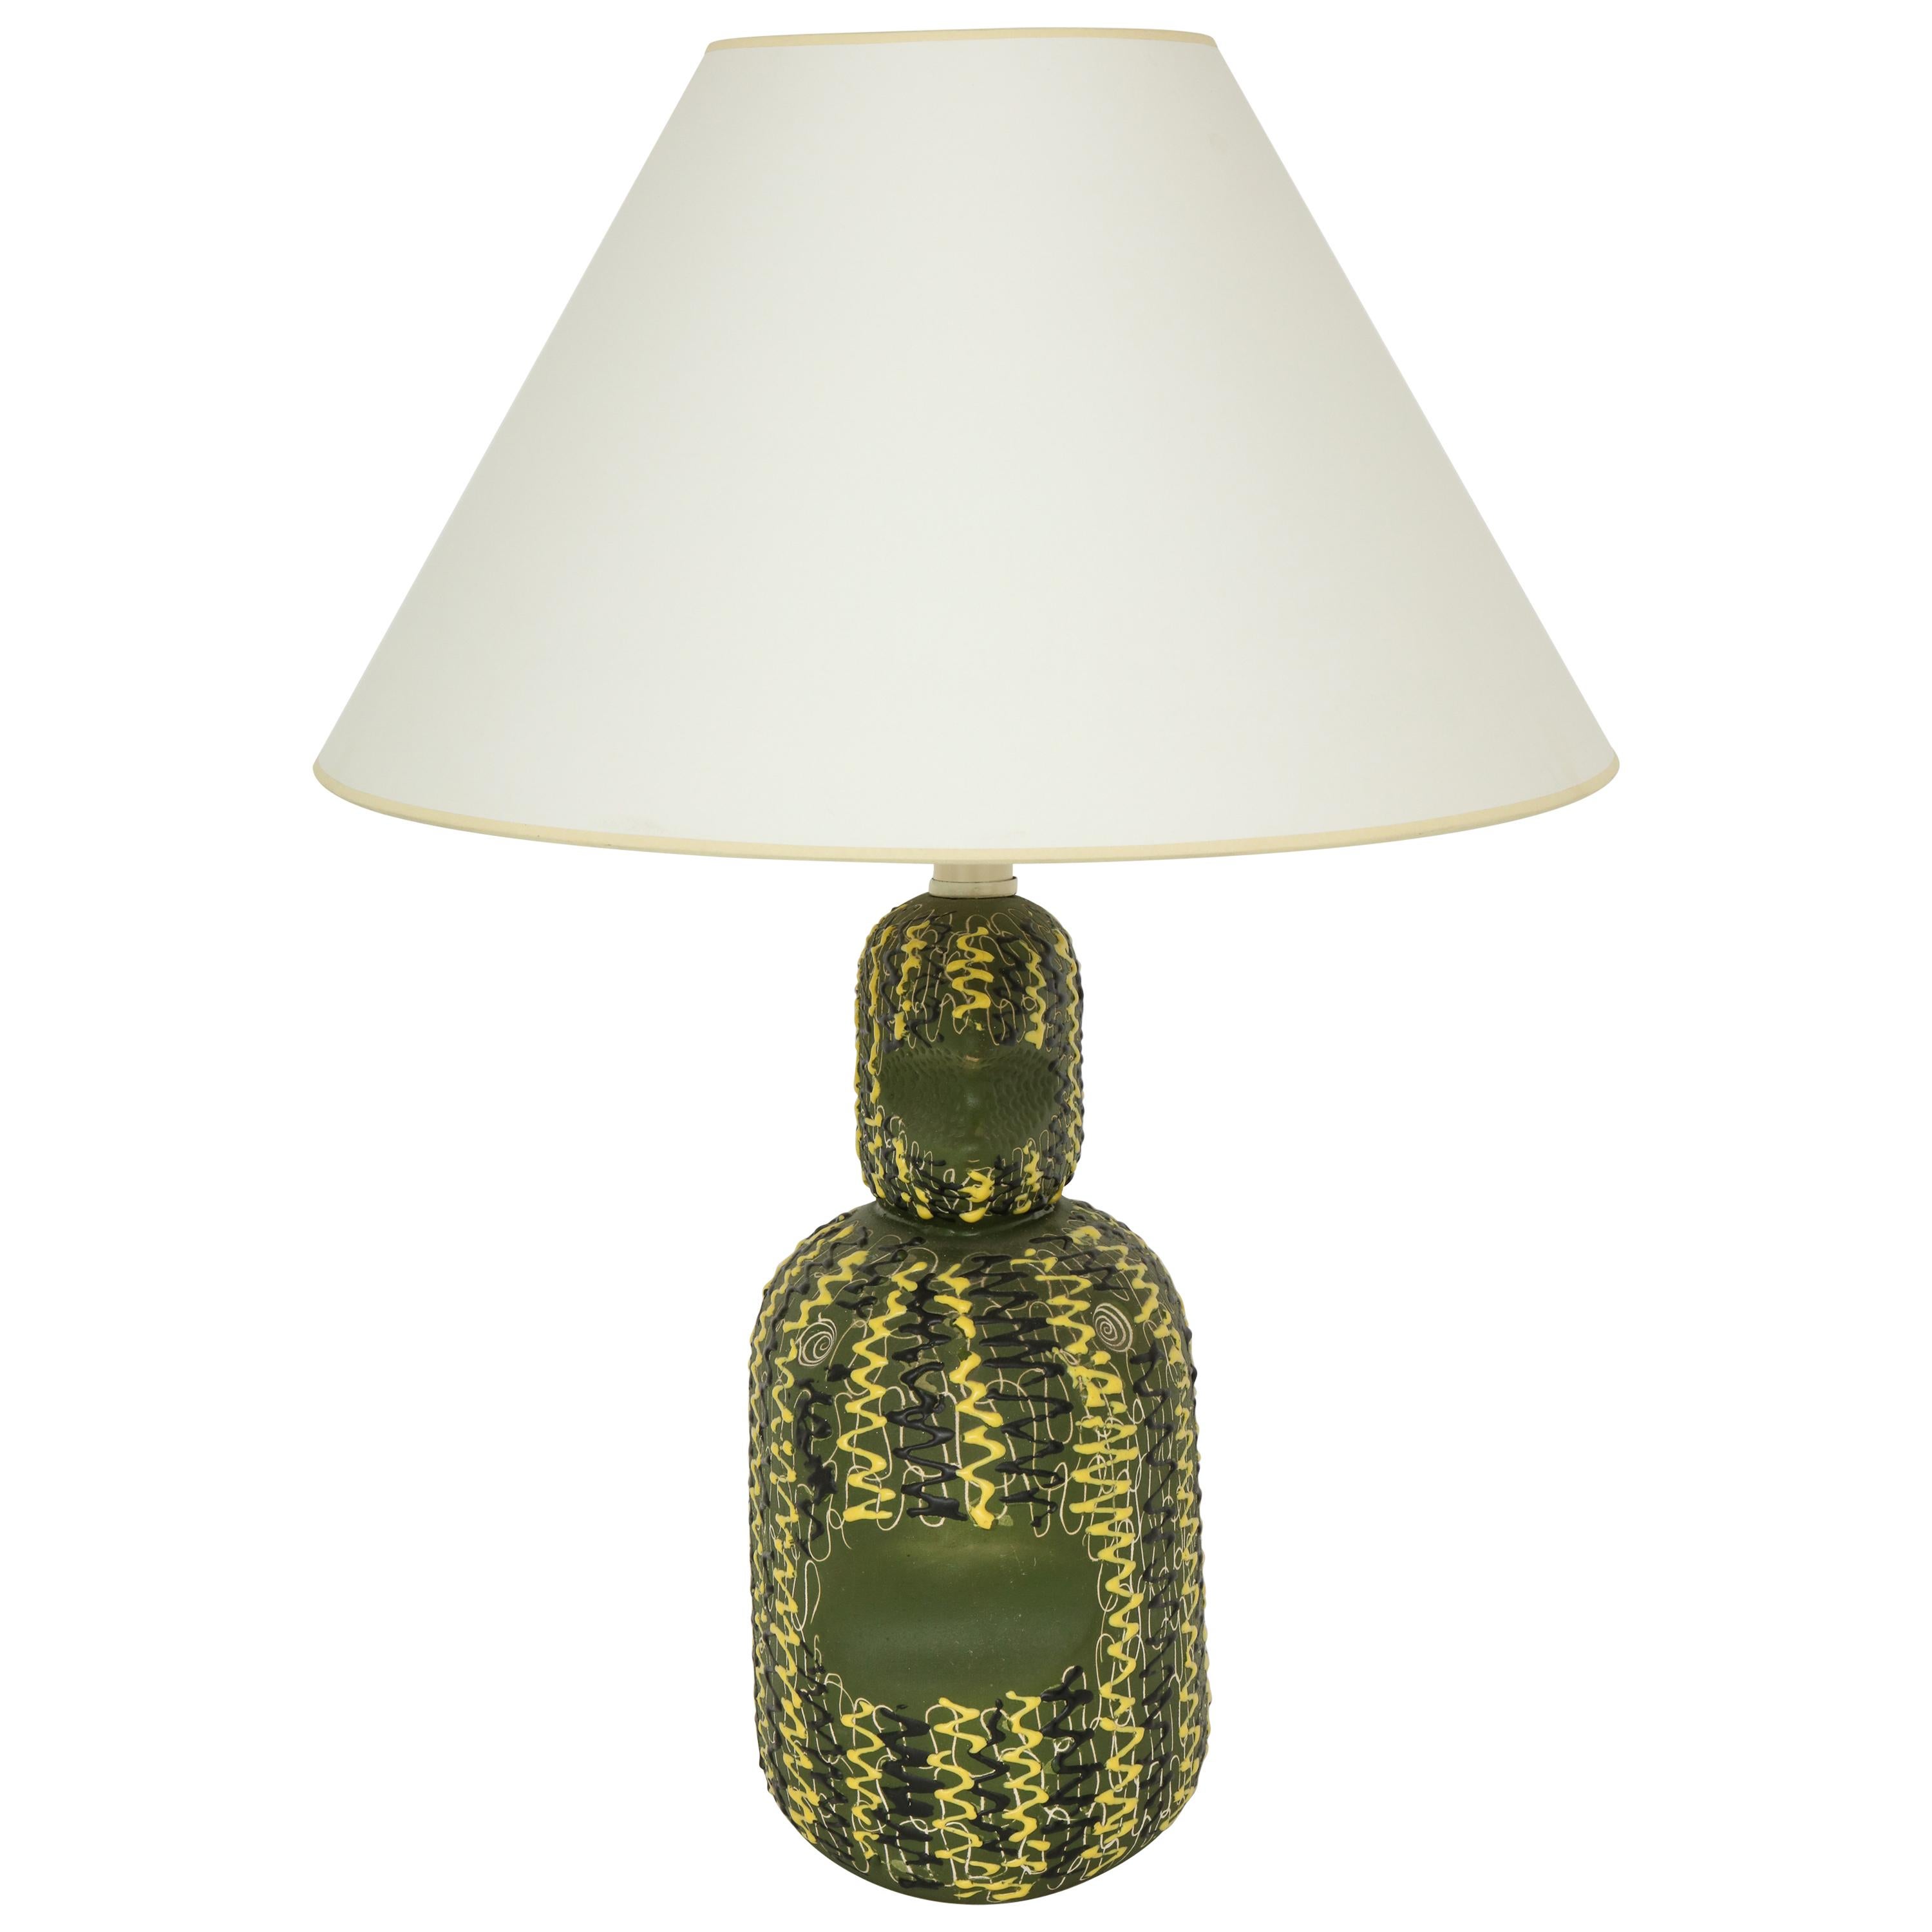 Italian Midcentury Green & Yellow Ceramic Table Lamp